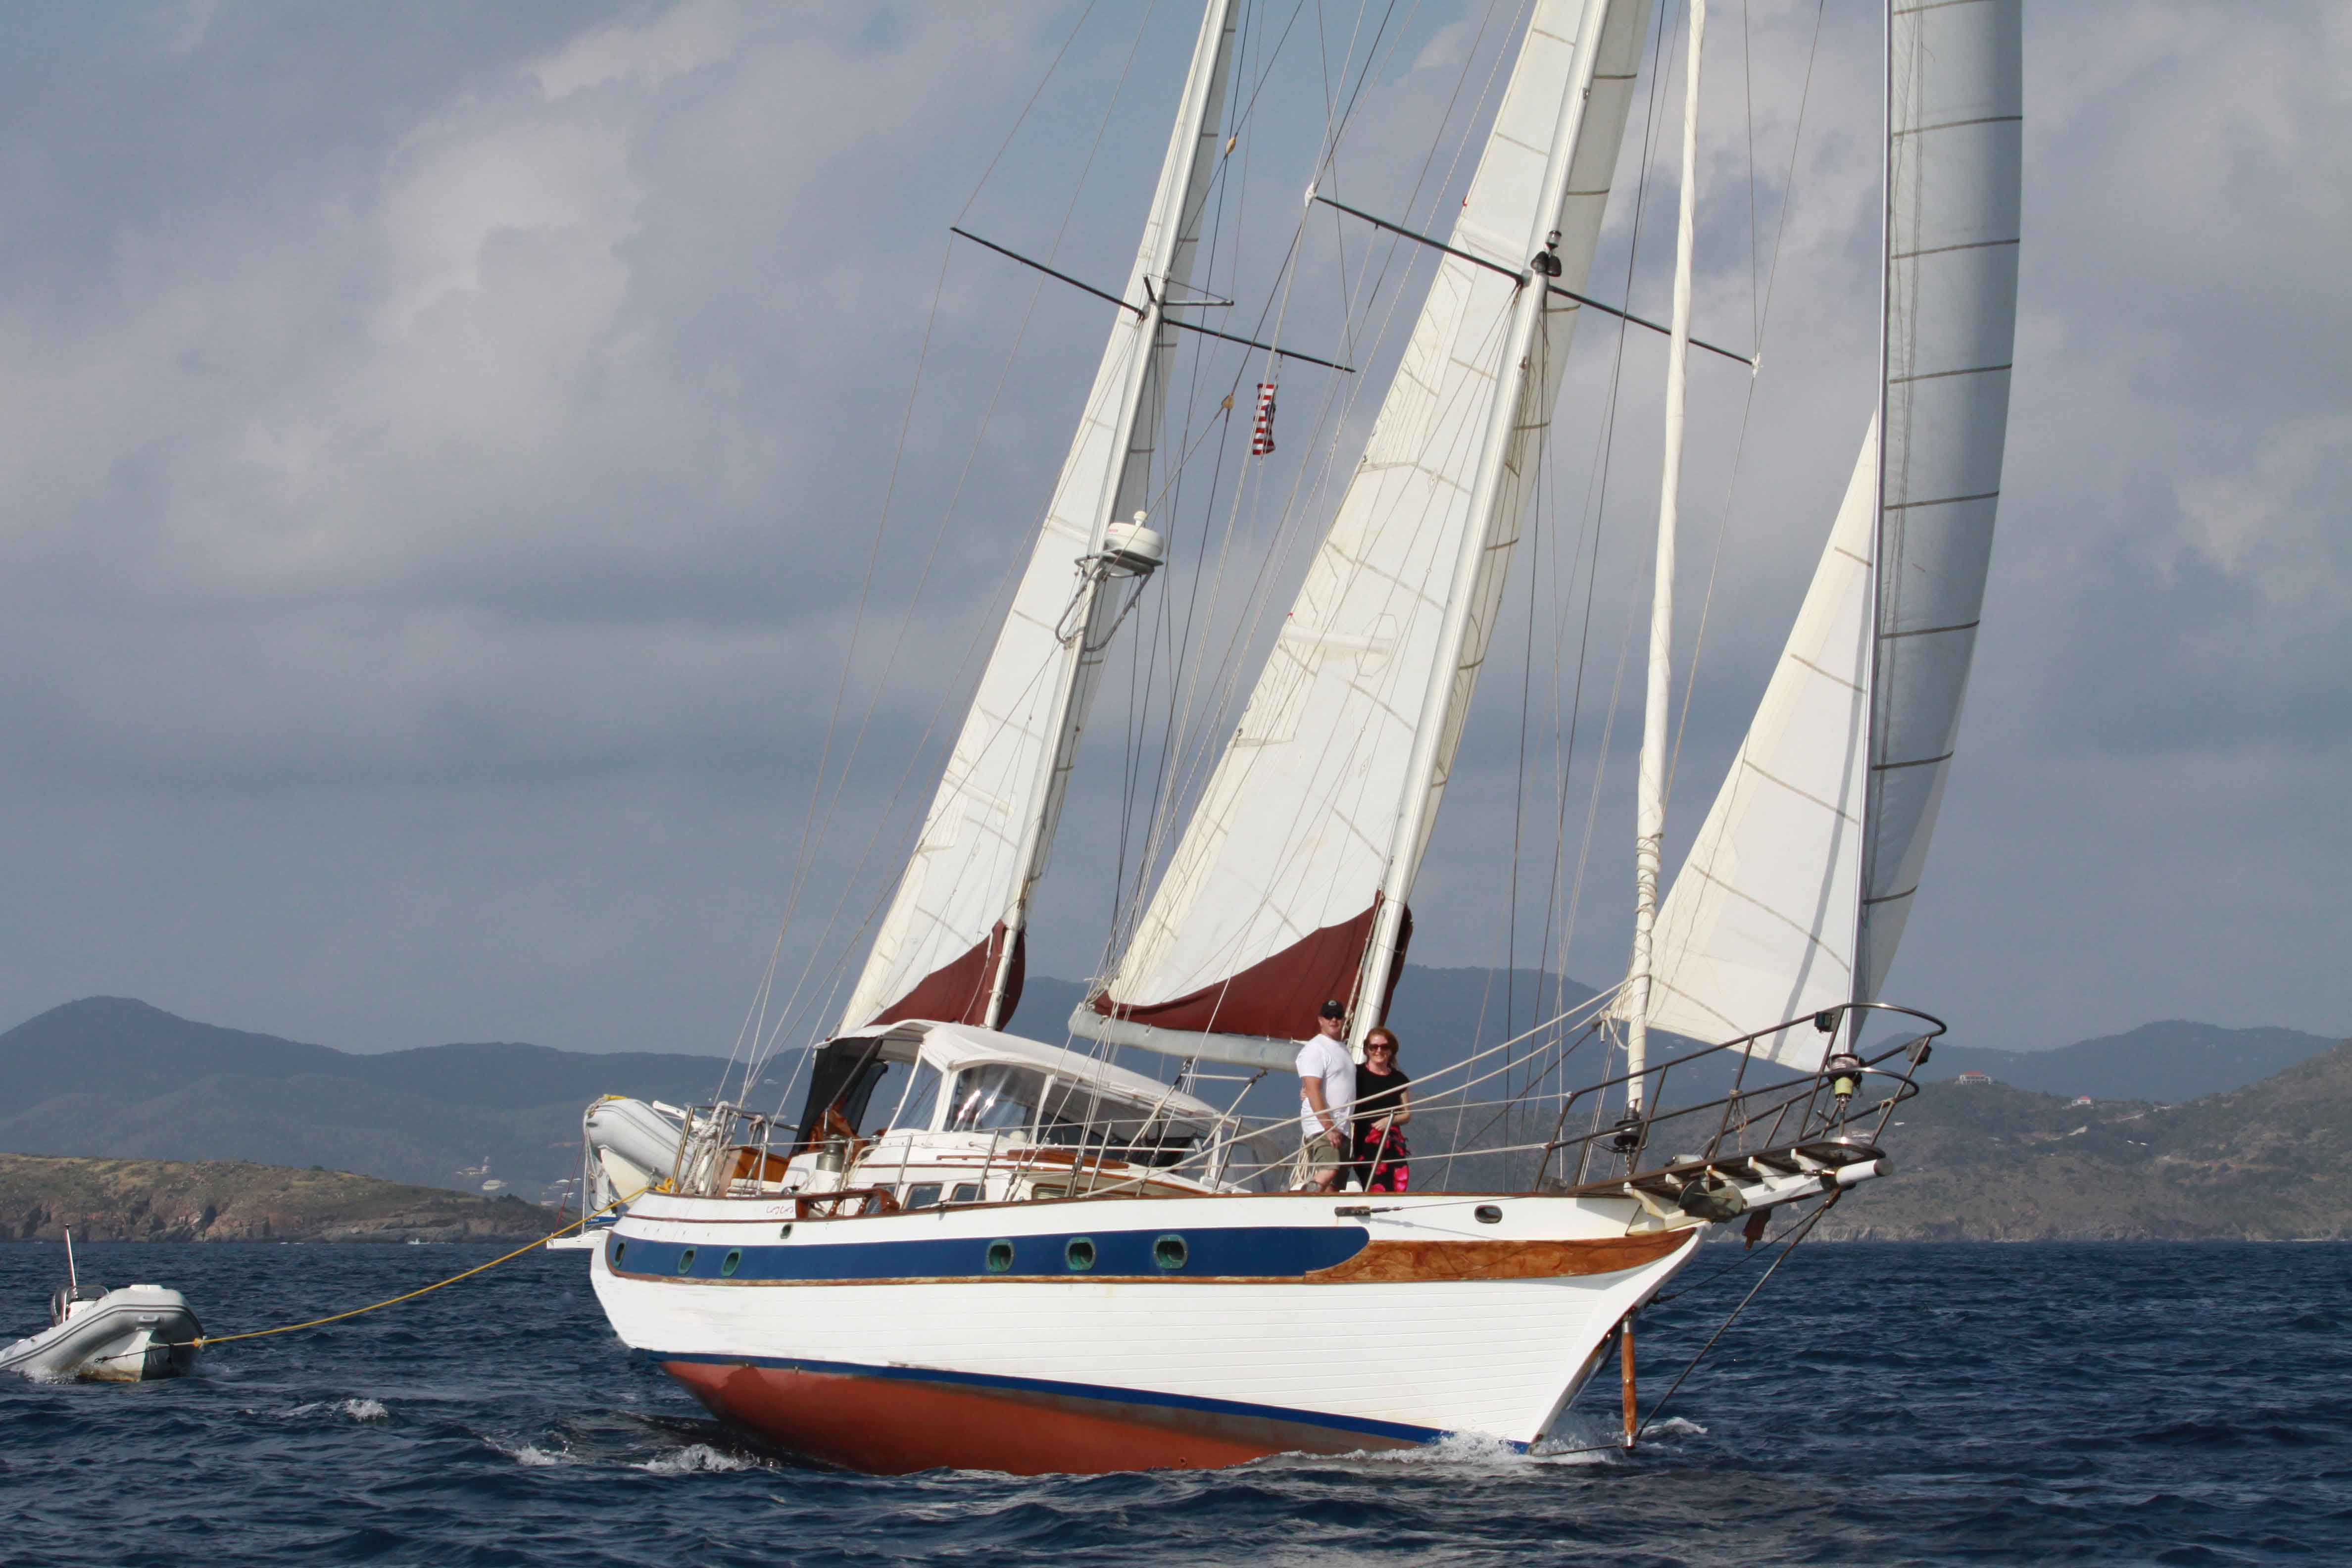 BVI crewed chater sailboat, Ragamuffin sailing